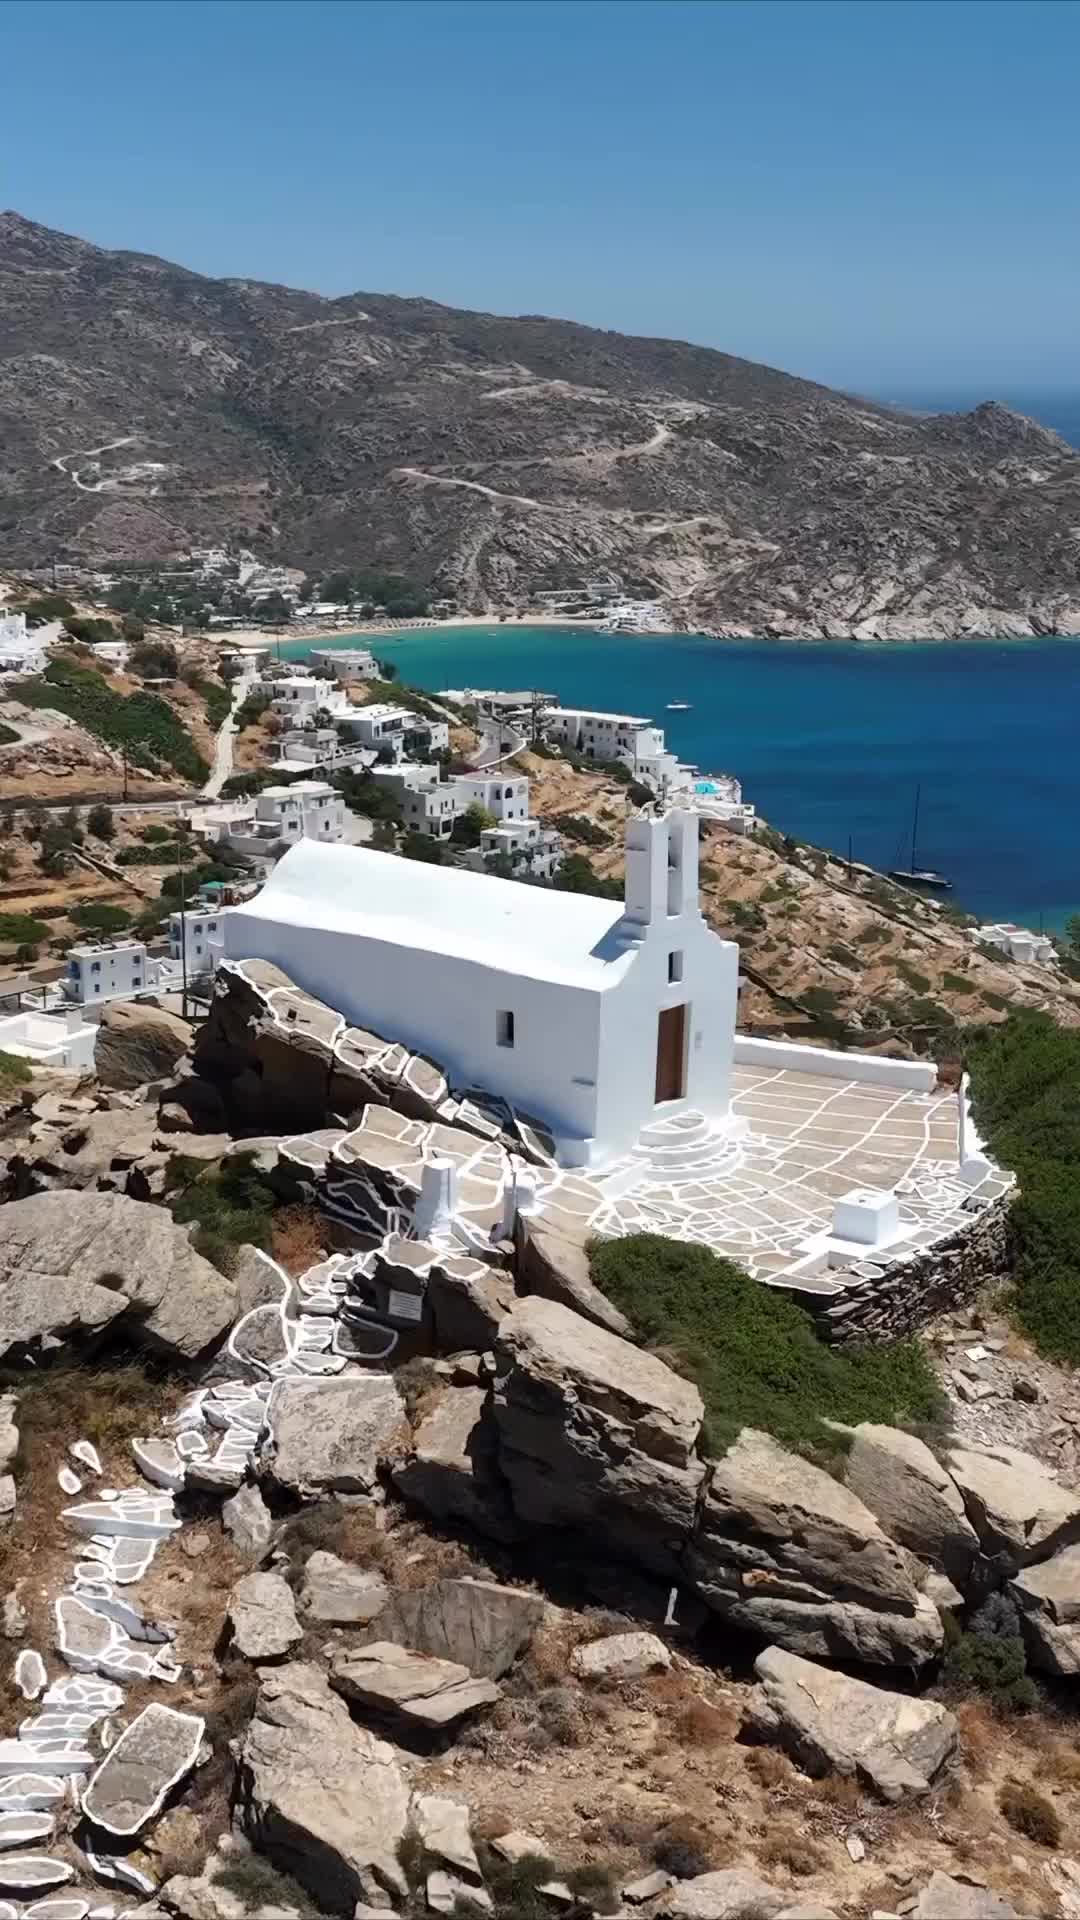 📍Agioi Anargyroi Ios Island Greece 🇬🇷 

⛪️ Isn’t a beautiful church? 

#iosgreece #iosisland #greece #greecestagram #summergreece #loveyougreece #greecetravel #greeceislands #greece_travel #greecevacation #greece_lovers #instagreece #greece_uncovered #greece_moments #dronevideo #aerialvideo #greece_is_awesome #greecetrip #greekislands #summergreece #church #greecepix #travelgreece #greeceisland #greecetrip #travelphotography #travelawesome #ae_greece #gf_greece #greeksummer